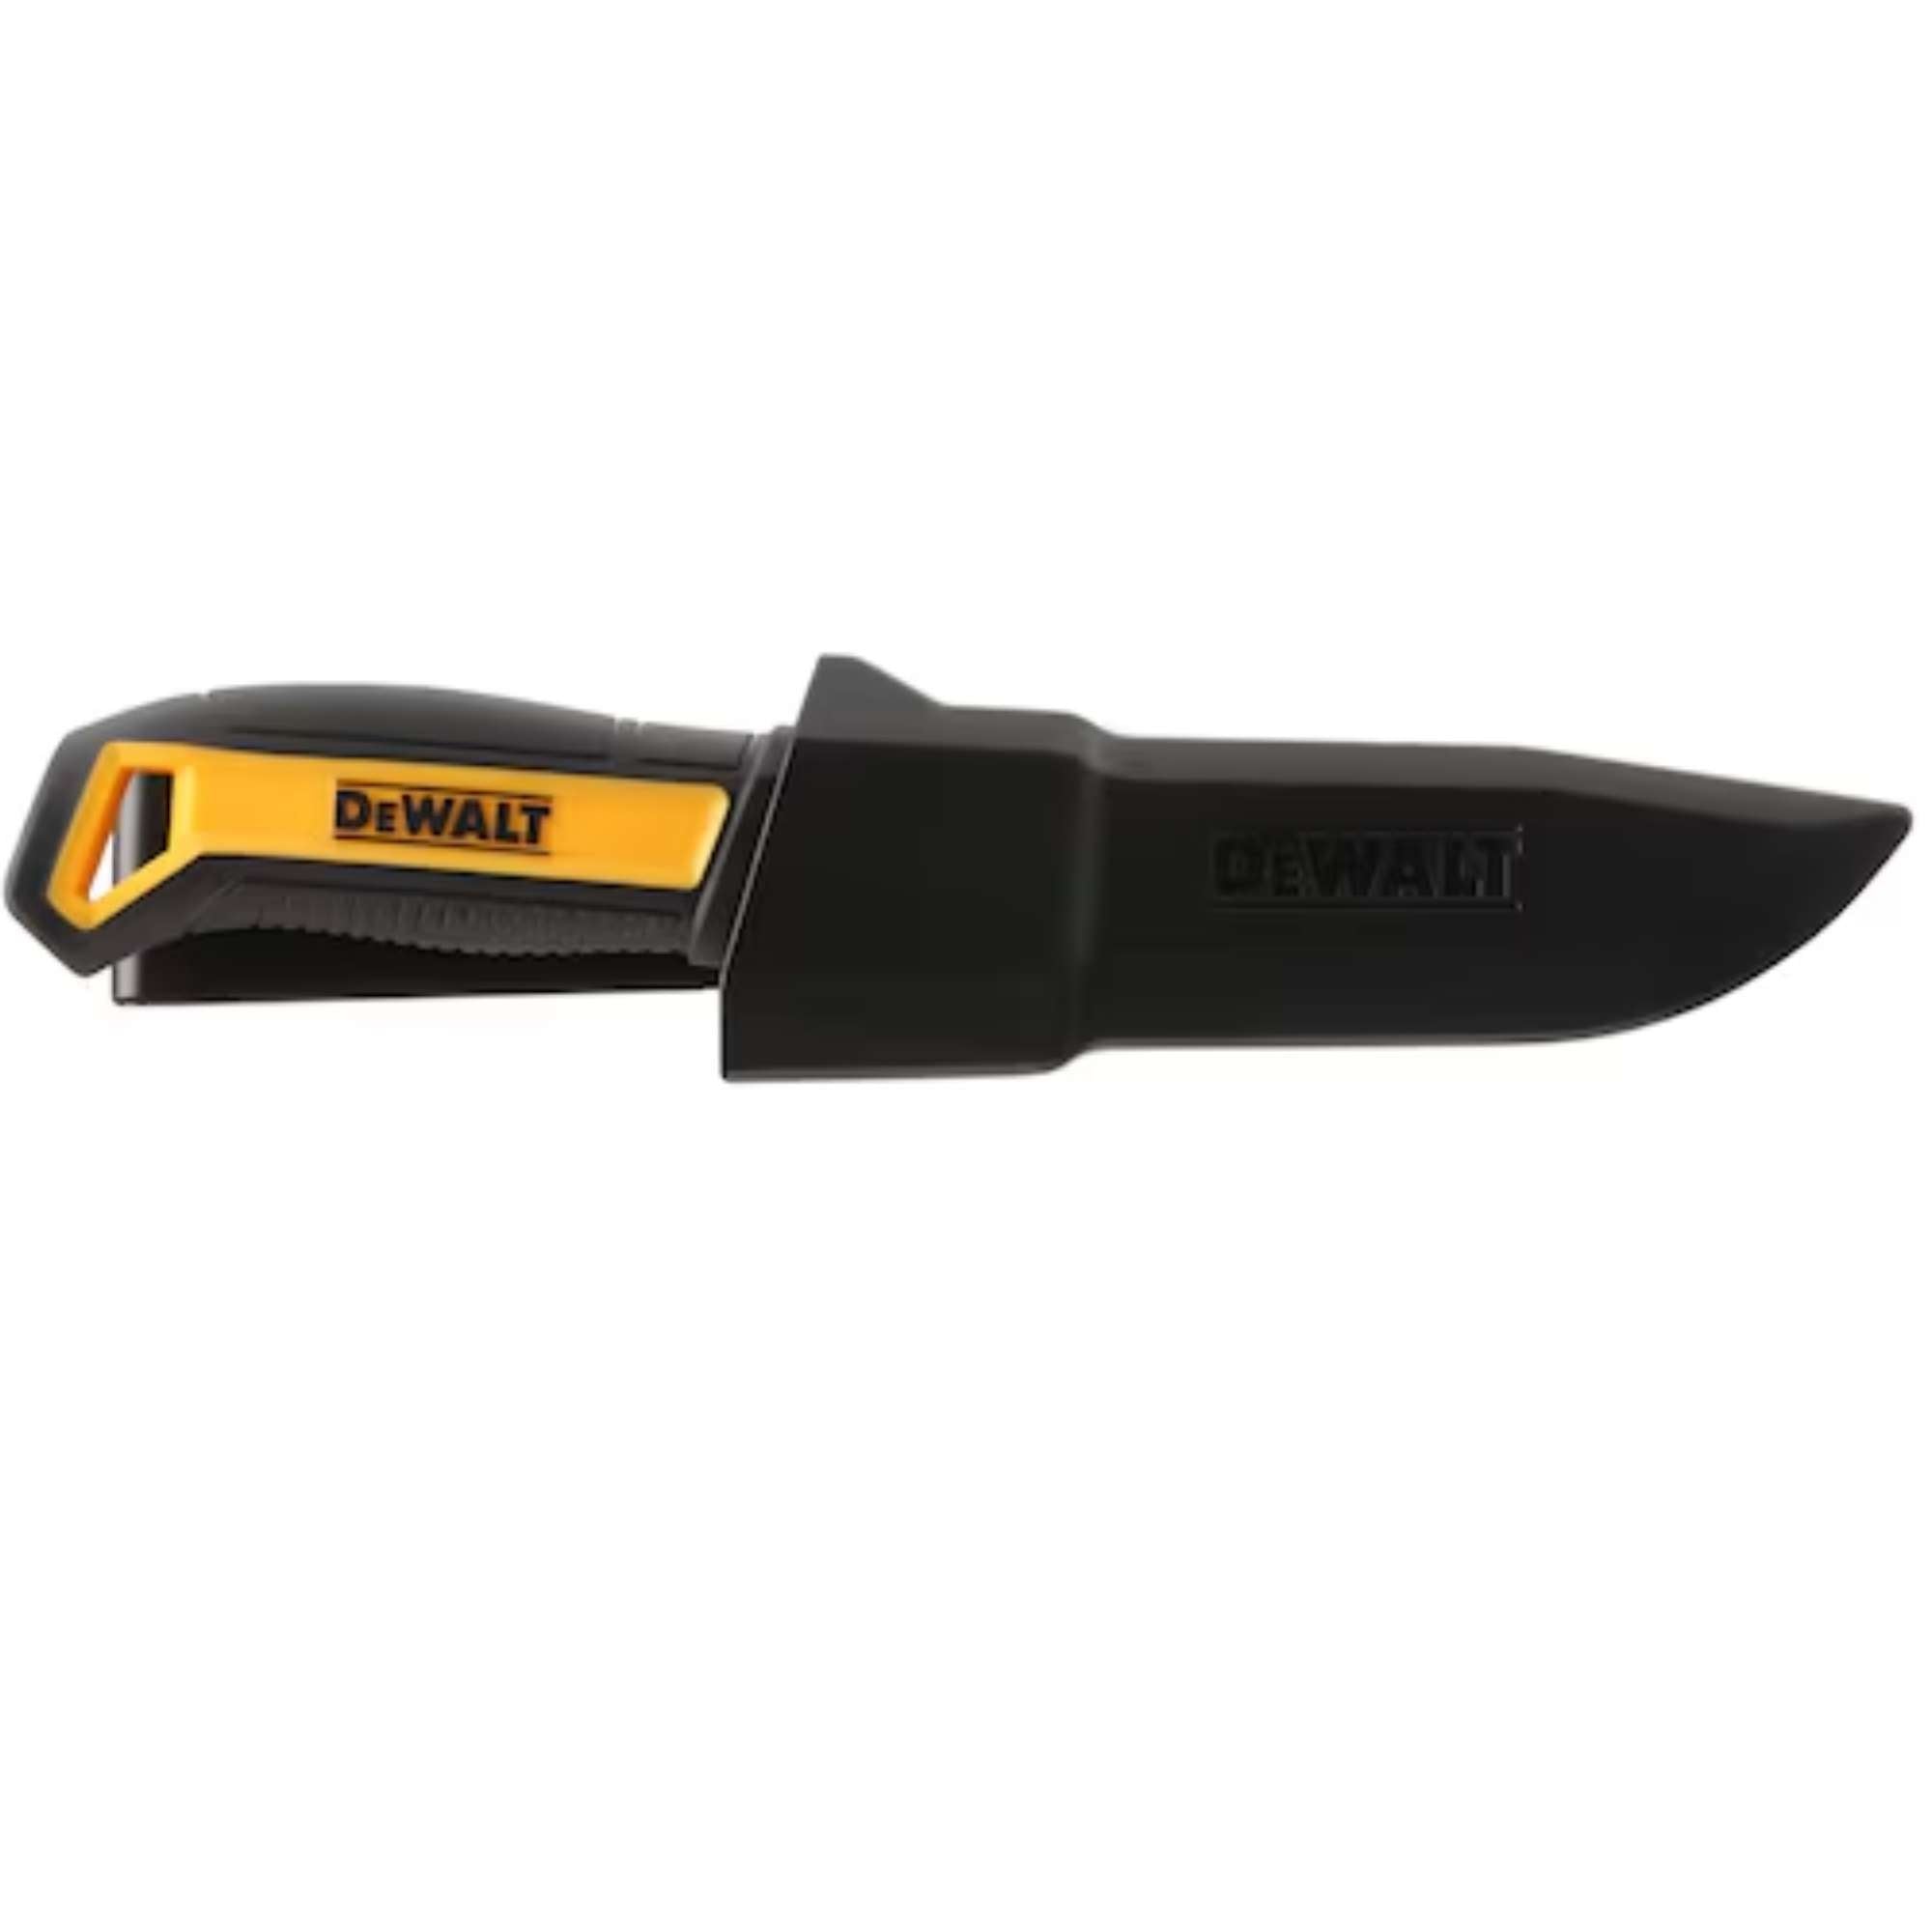 90mm fixed blade multirole knife - Dewalt DWHT110354